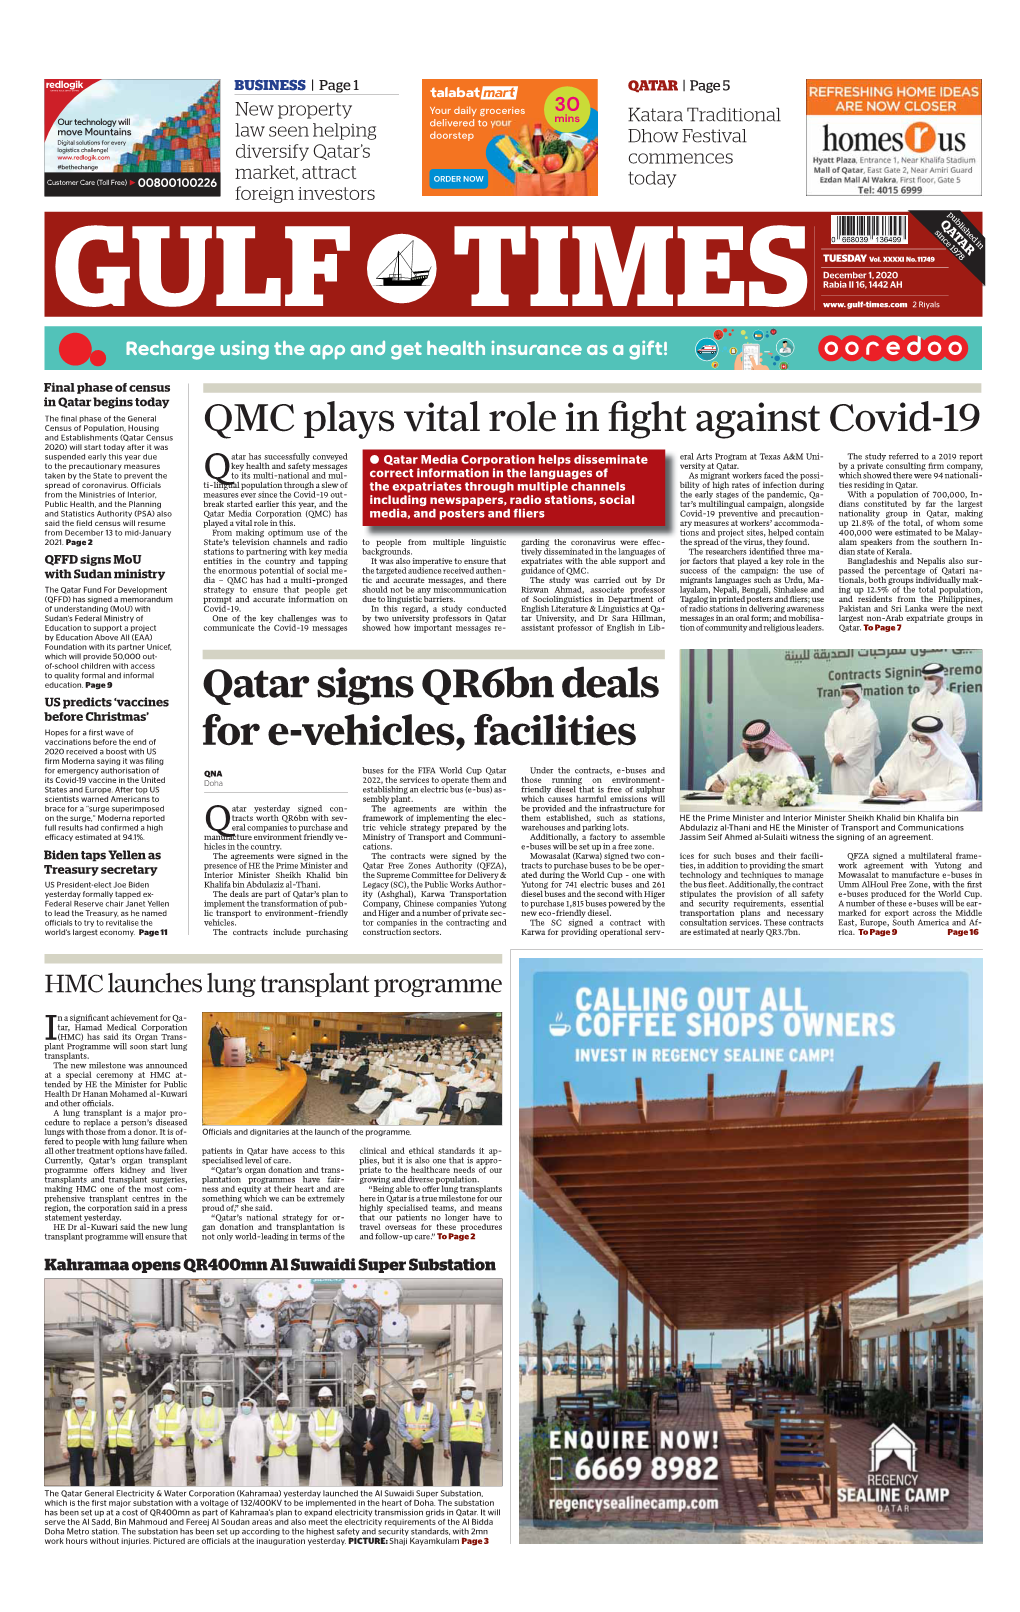 Qatar Signs Qr6bn Deals for E-Vehicles, Facilities